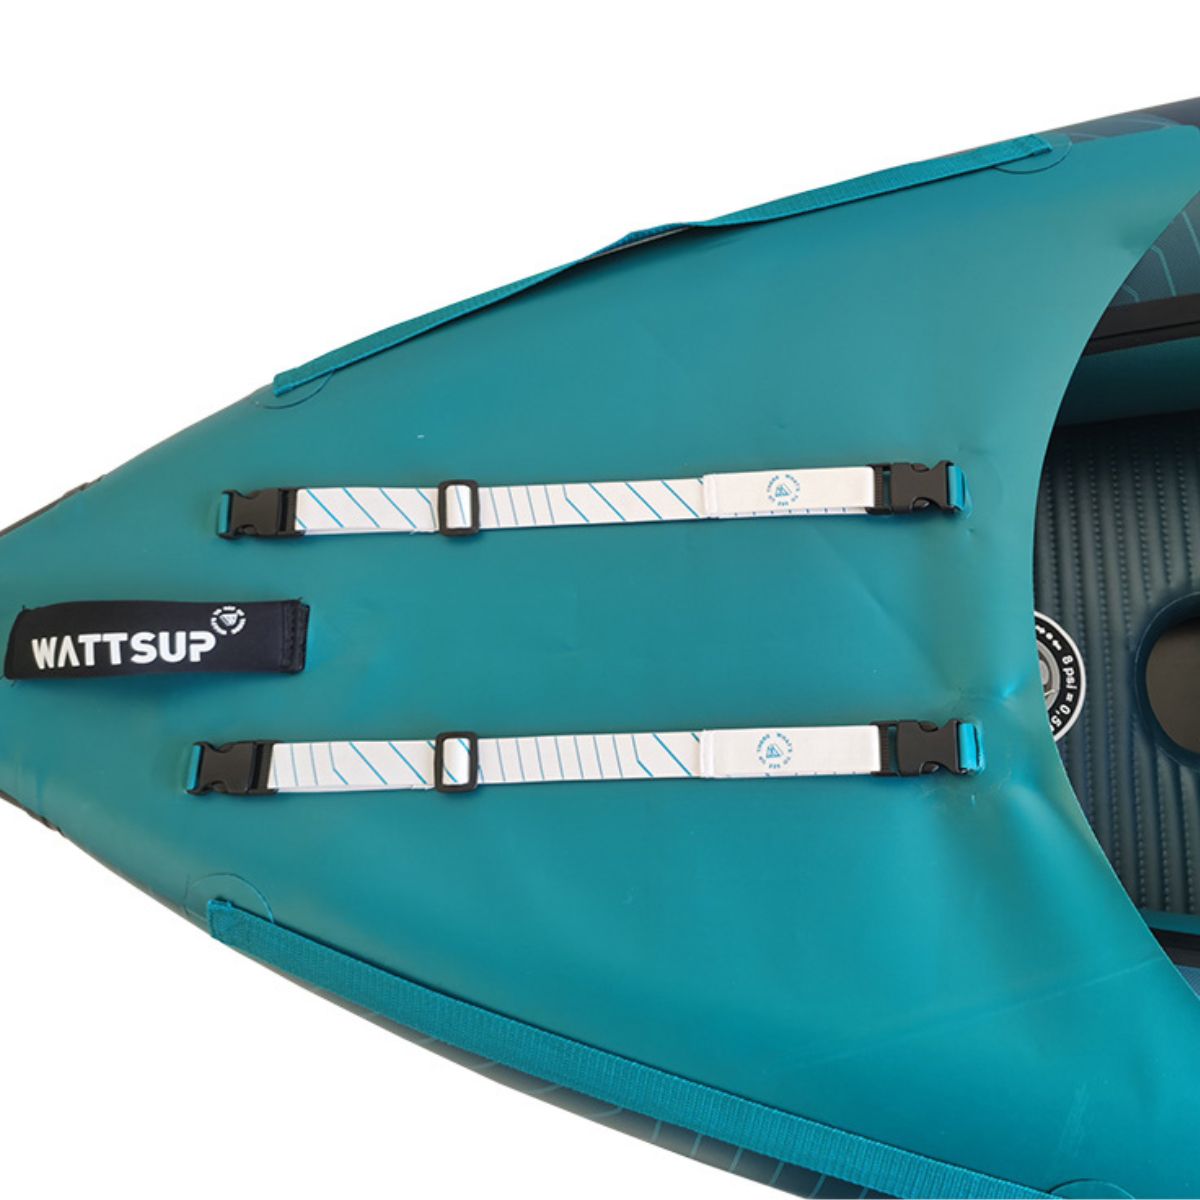 Kayak Hinchable - 1 Persona - Con Accesorios - Wattsup Cod - Kayak Hinchable  MKP